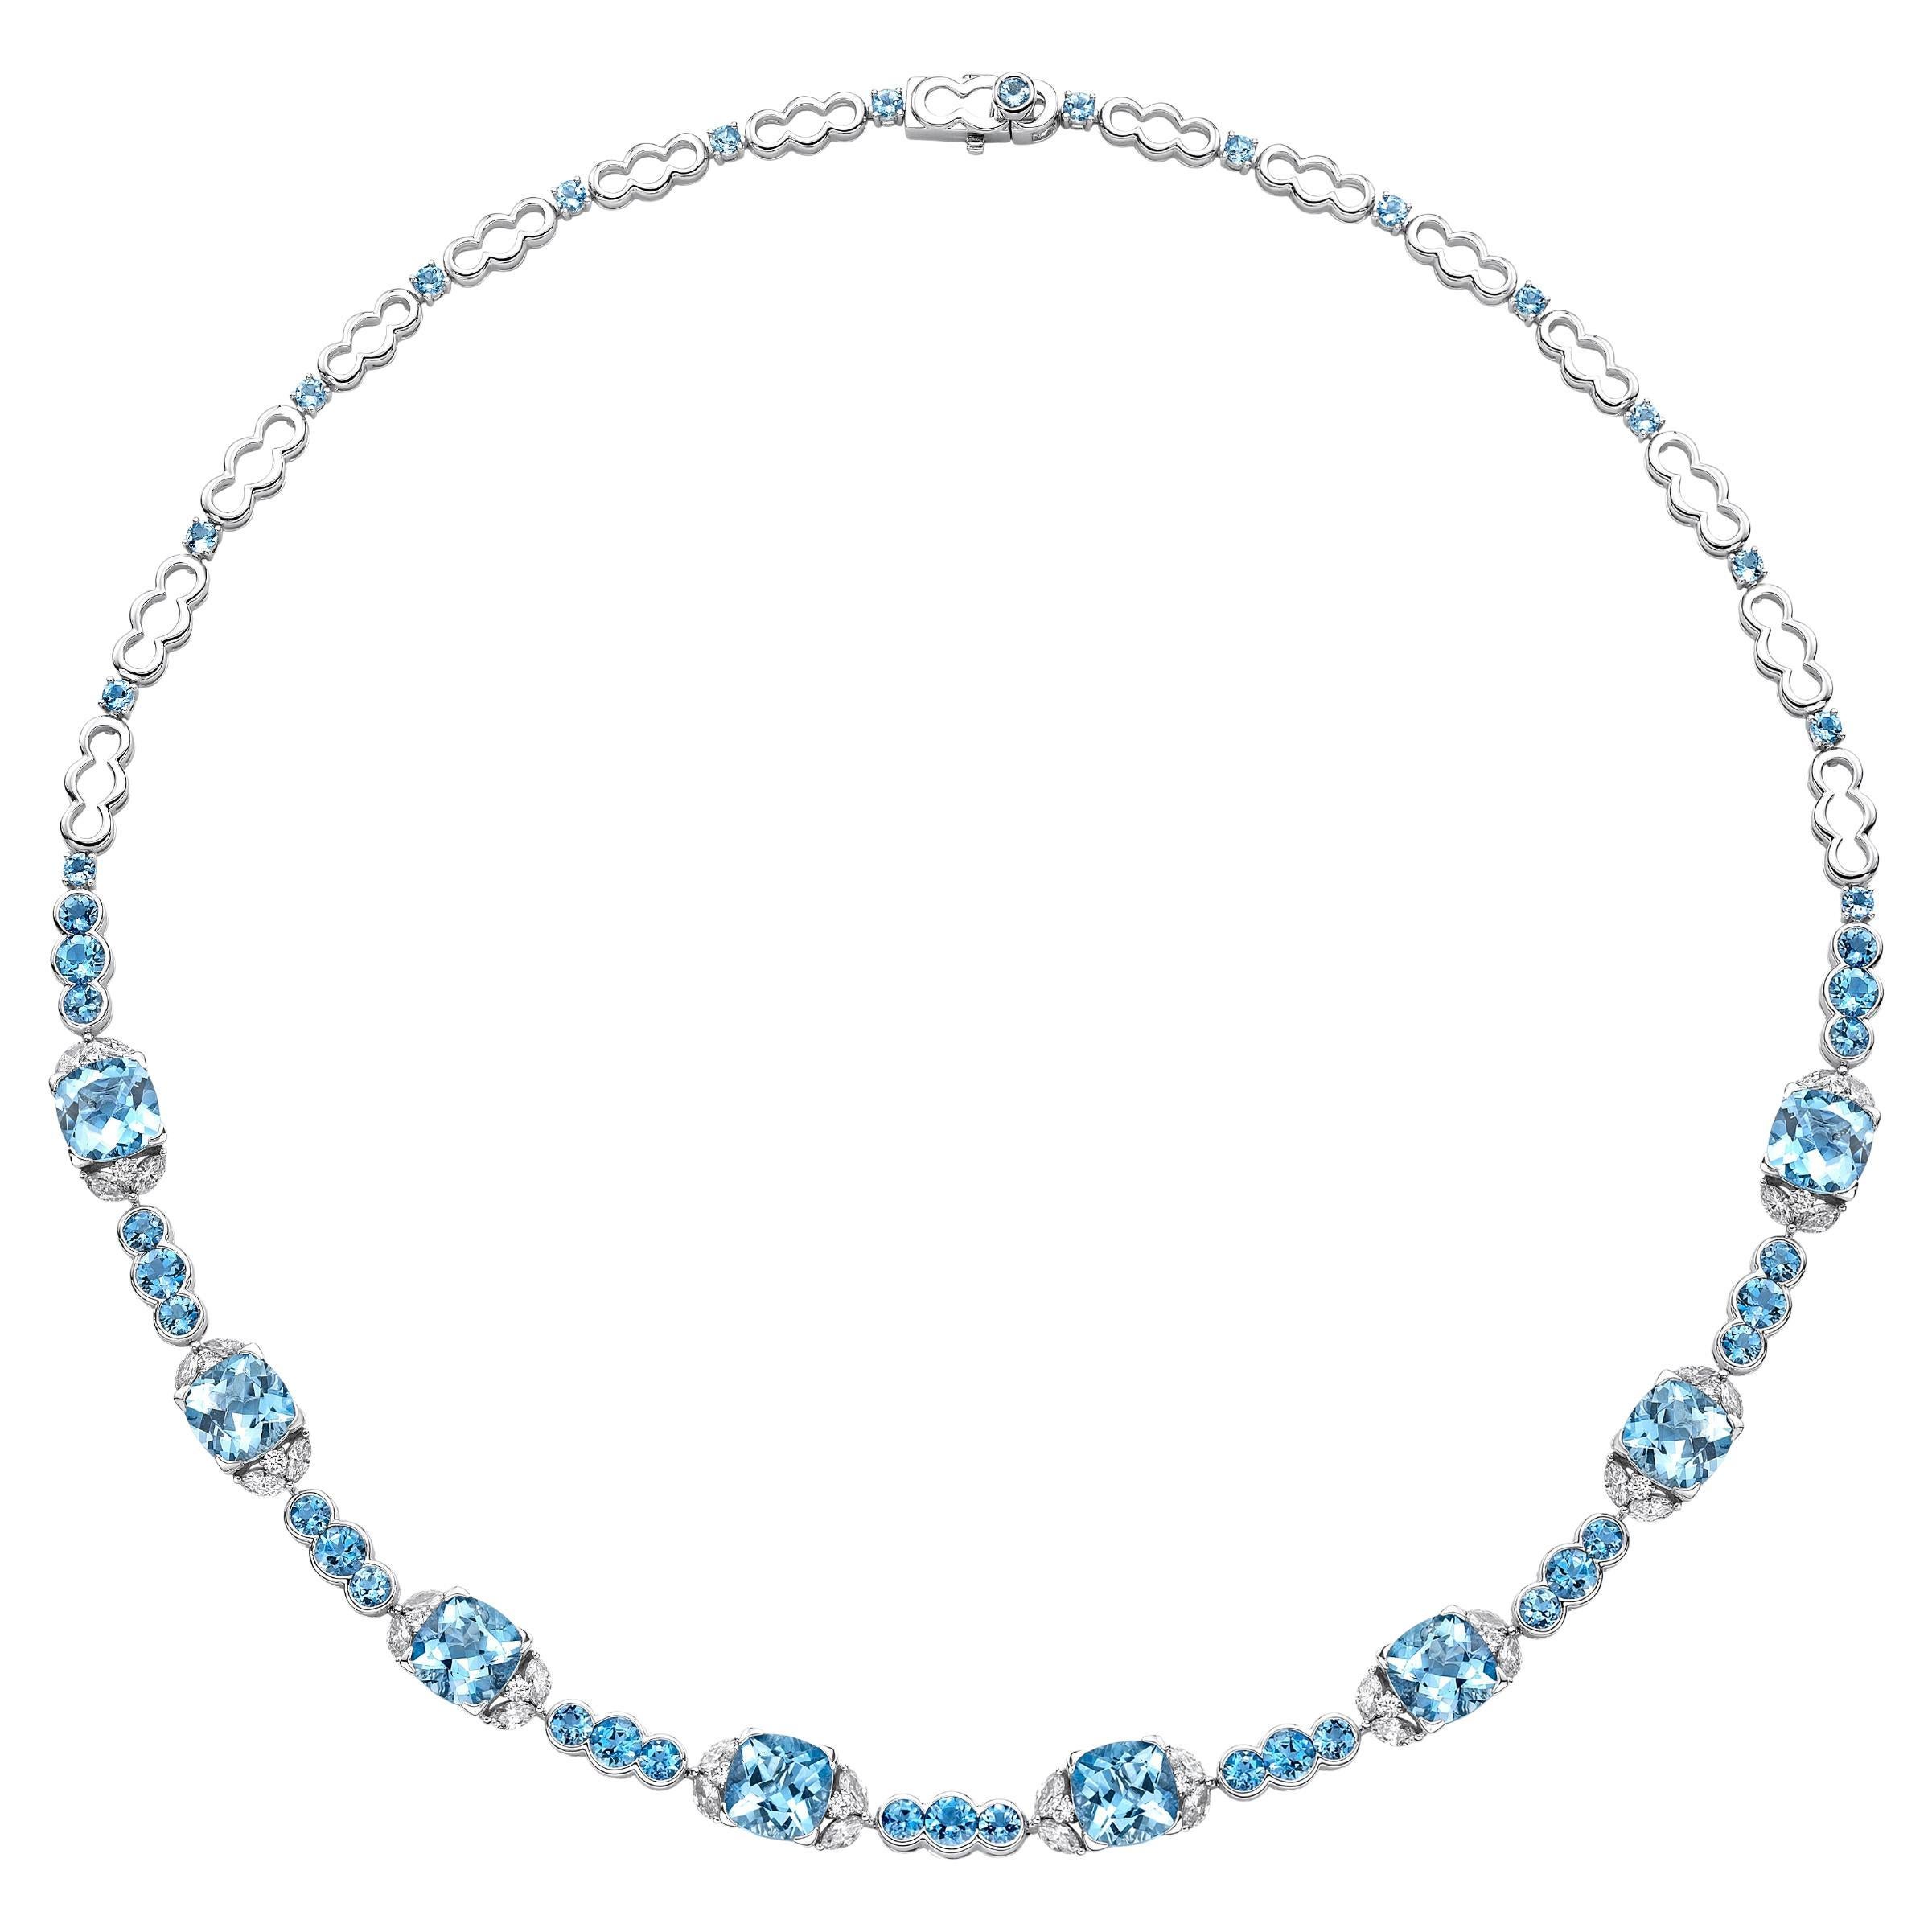 Collier d'aigue-marine bleu océan avec diamants, 18 carats